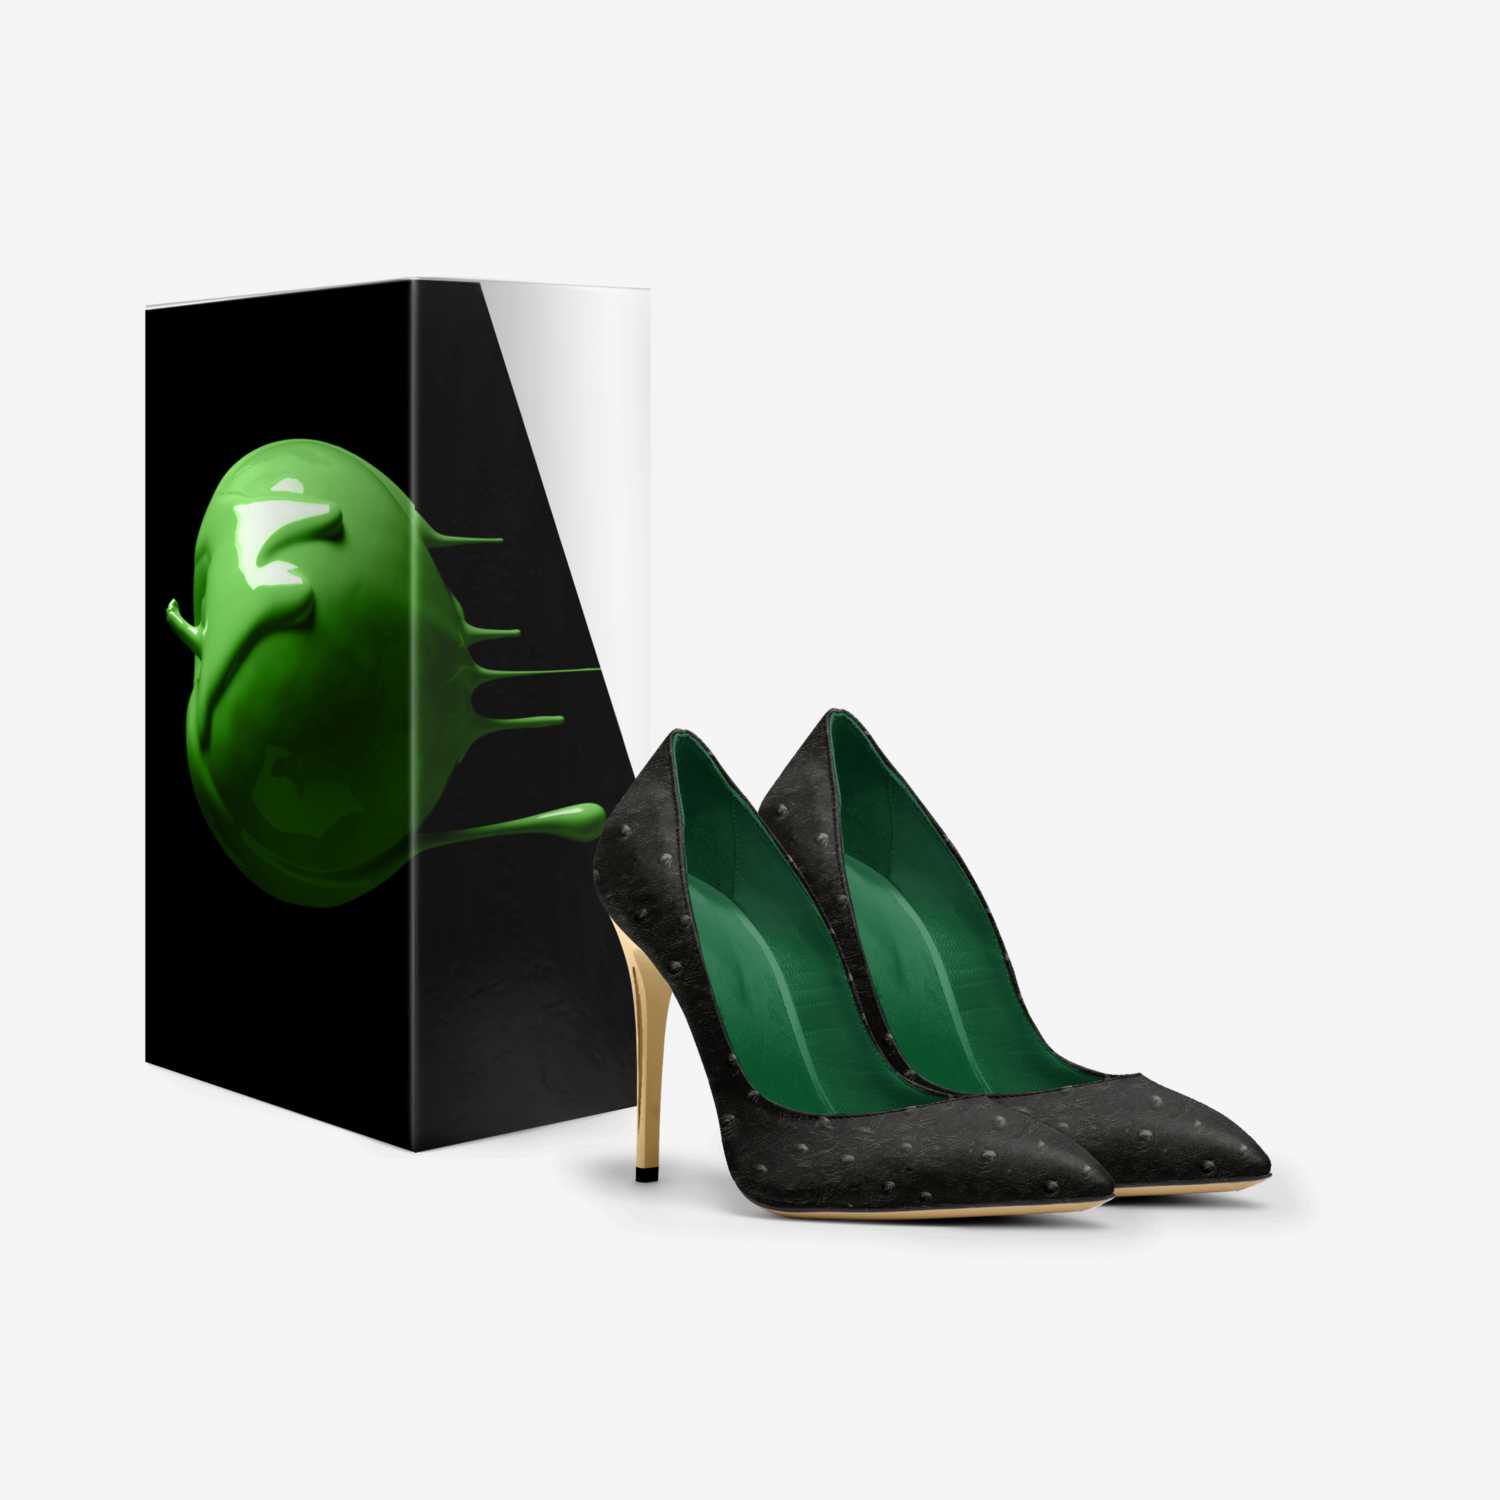 HÜEMÖN  custom made in Italy shoes by Shariffa Nyan | Box view